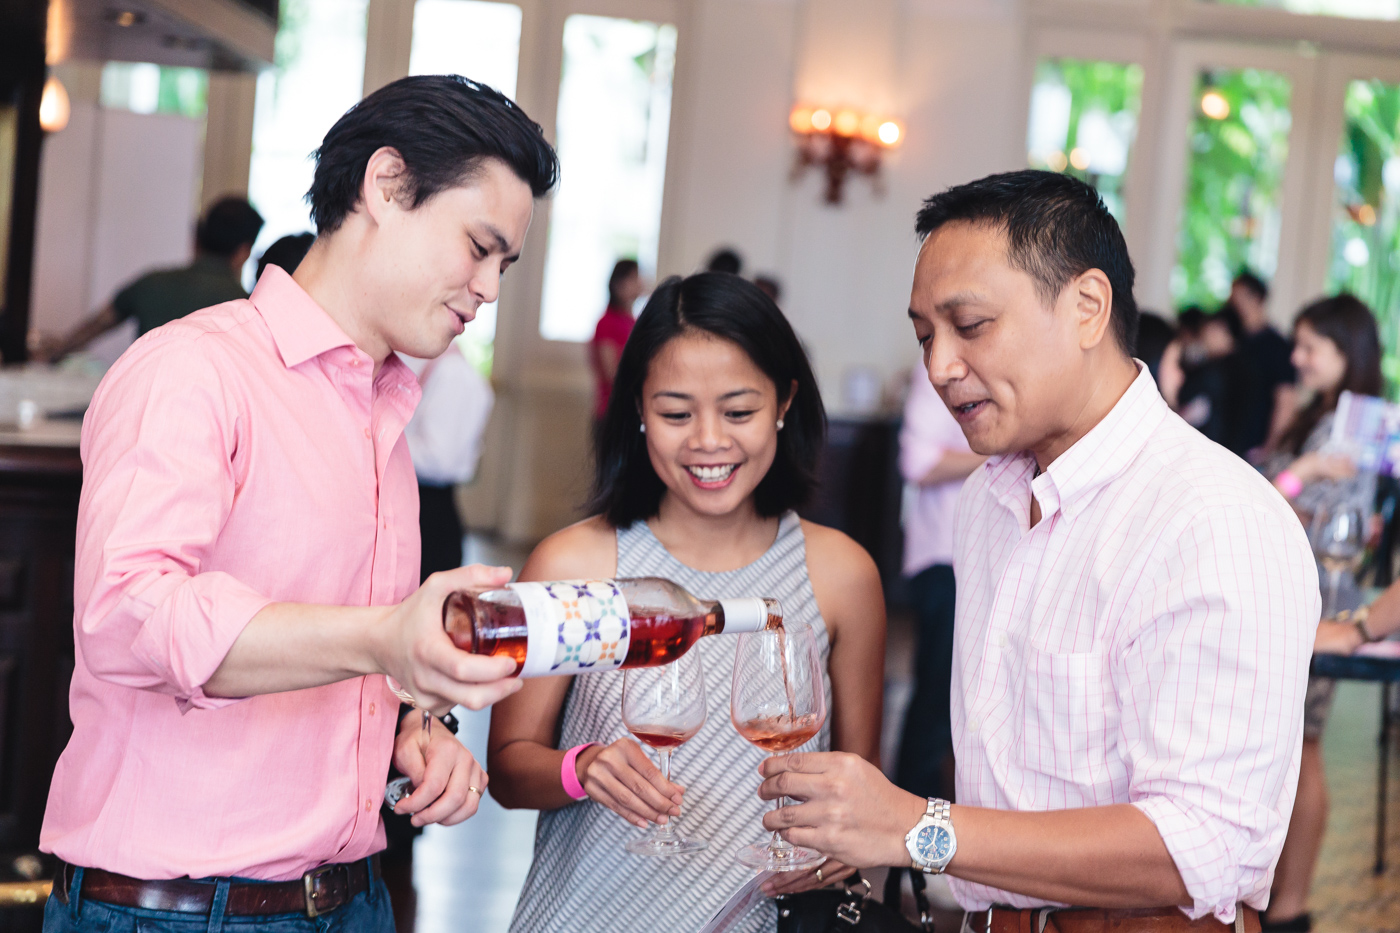 Guests having a drink at Rosé Revolution (Credit: The Flying Winemaker)